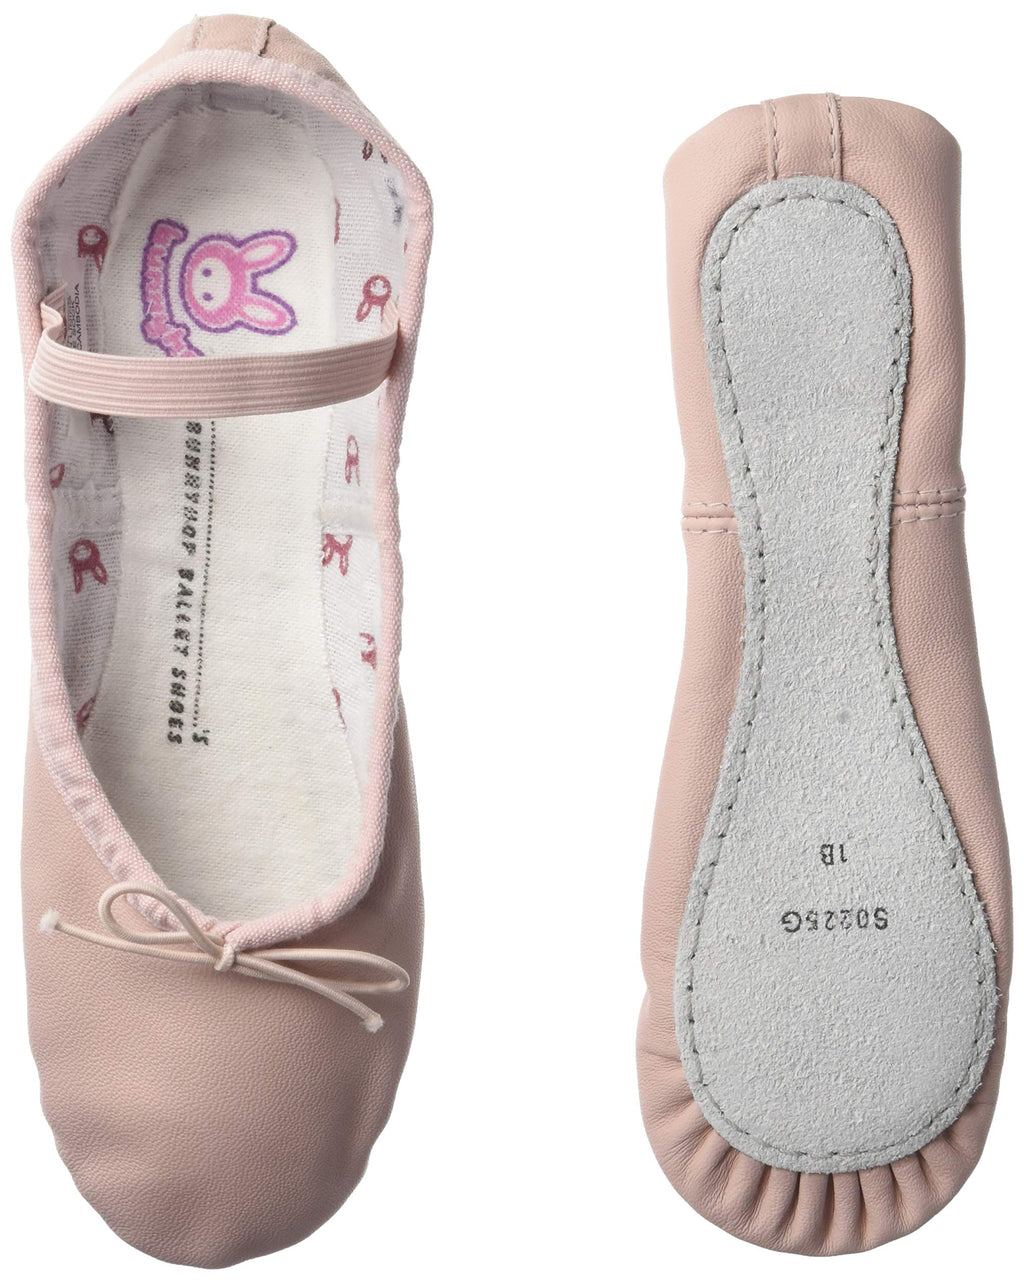 [AUSTRALIA] - Bloch Dance Girl's Bunnyhop Full Sole Leather Ballet Slipper/Shoe, Pink, Wide Big Kid 